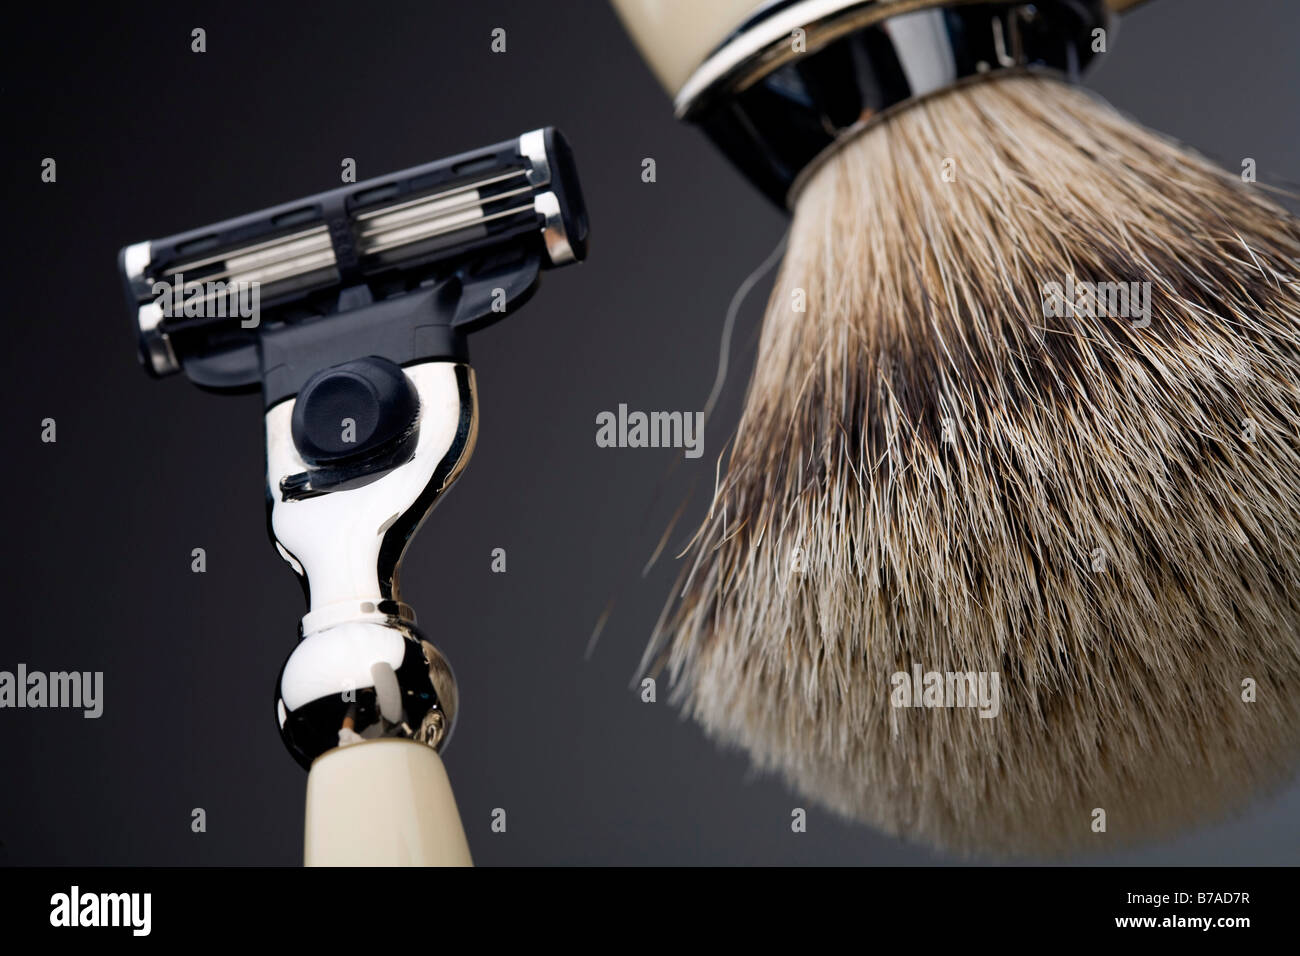 Shaver, shaving brush Stock Photo